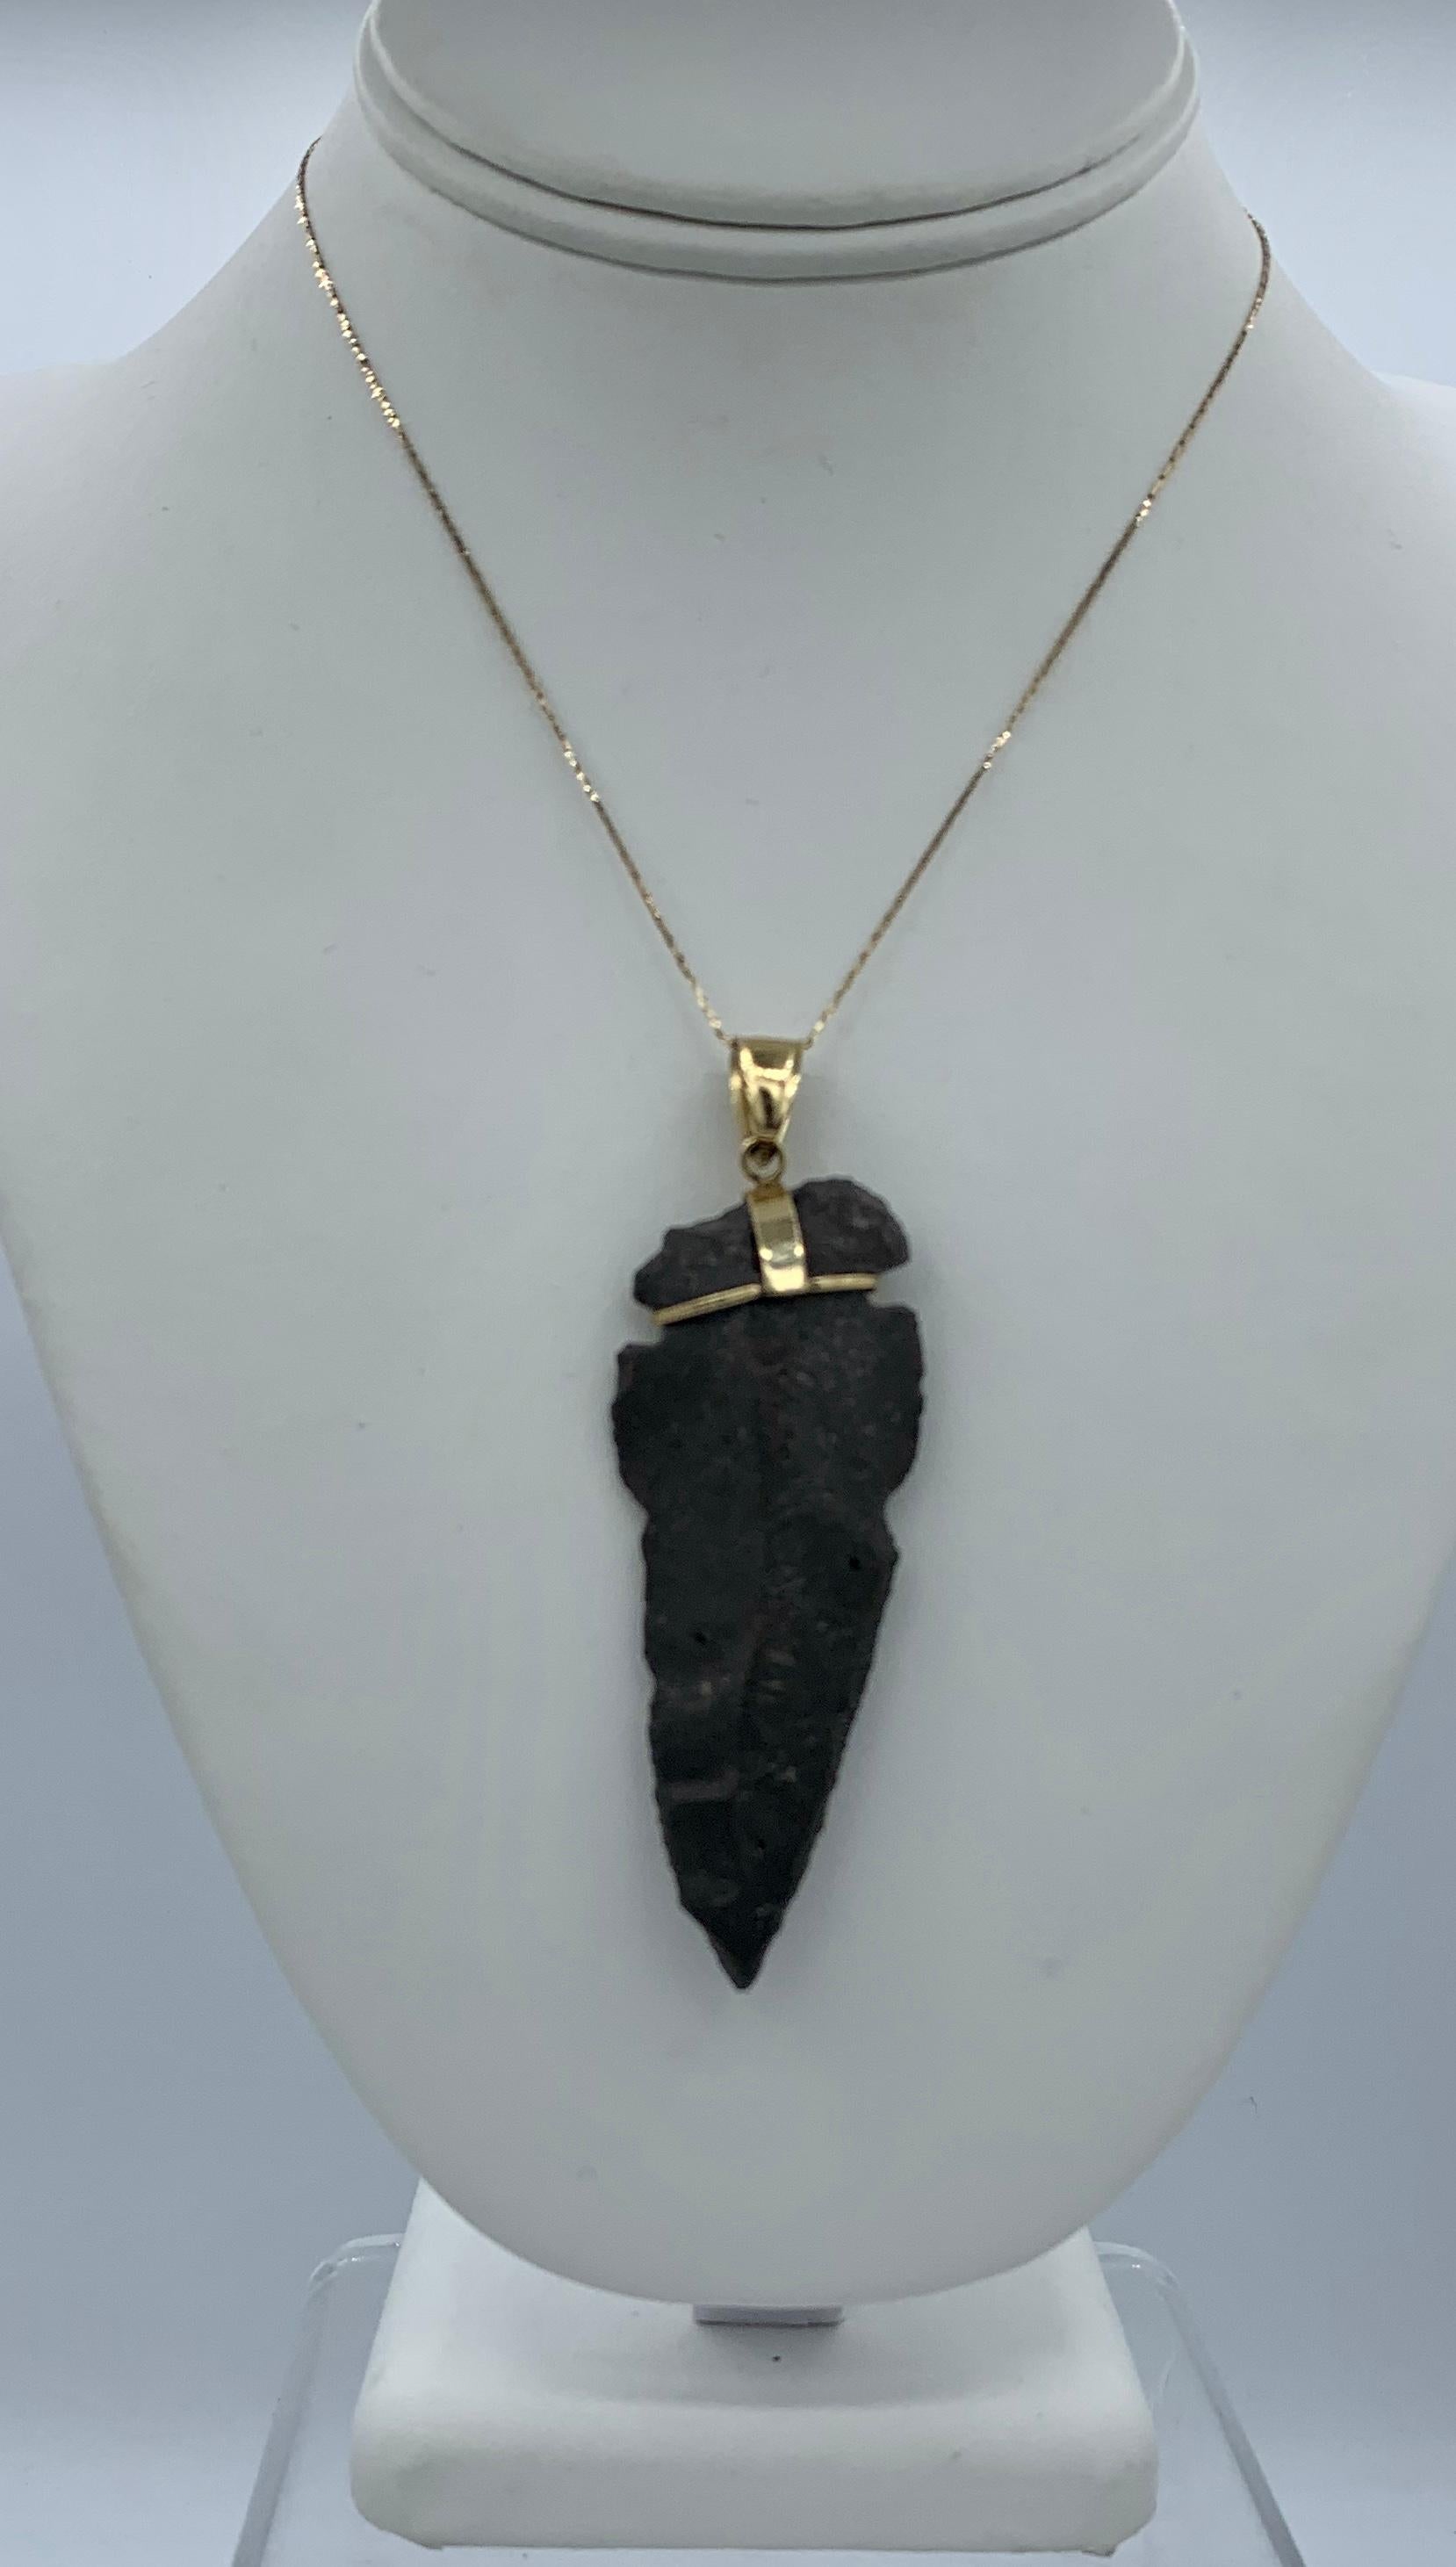 arrowhead pendant meaning